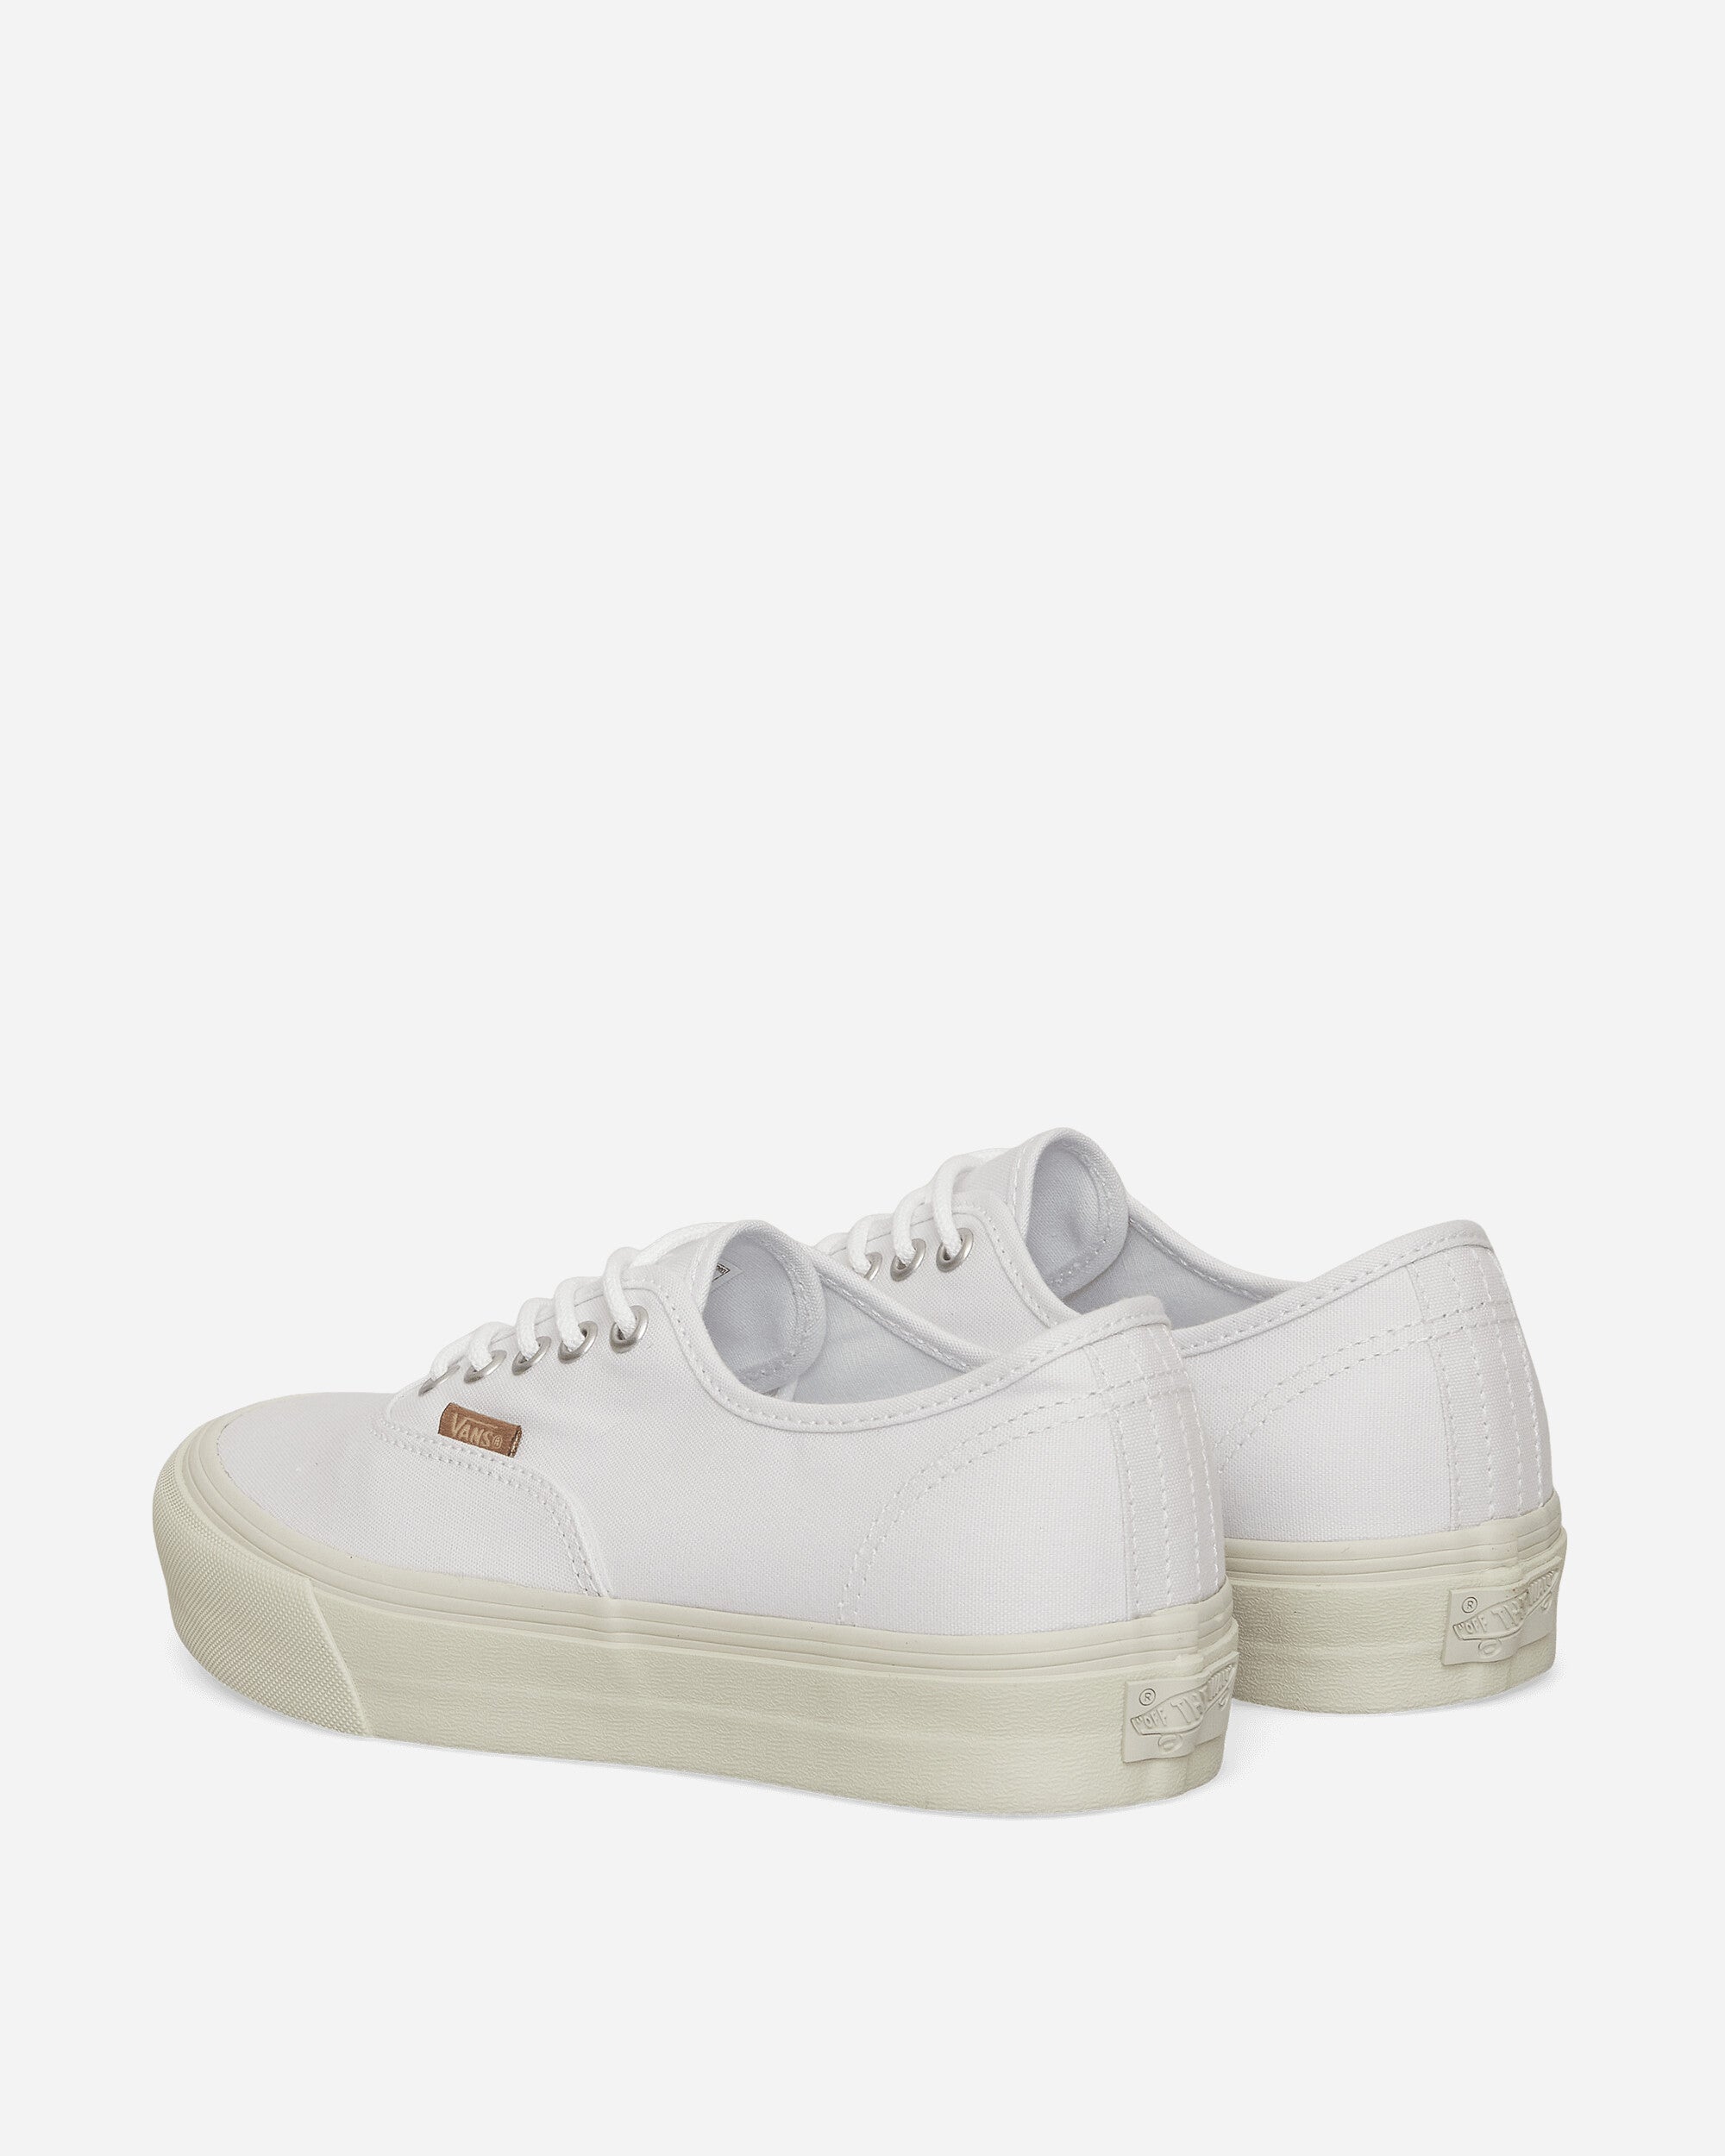 Vans Ua Authentic Vlt Lx Jjjjound True White Sneakers Low VN0A4CS4W001